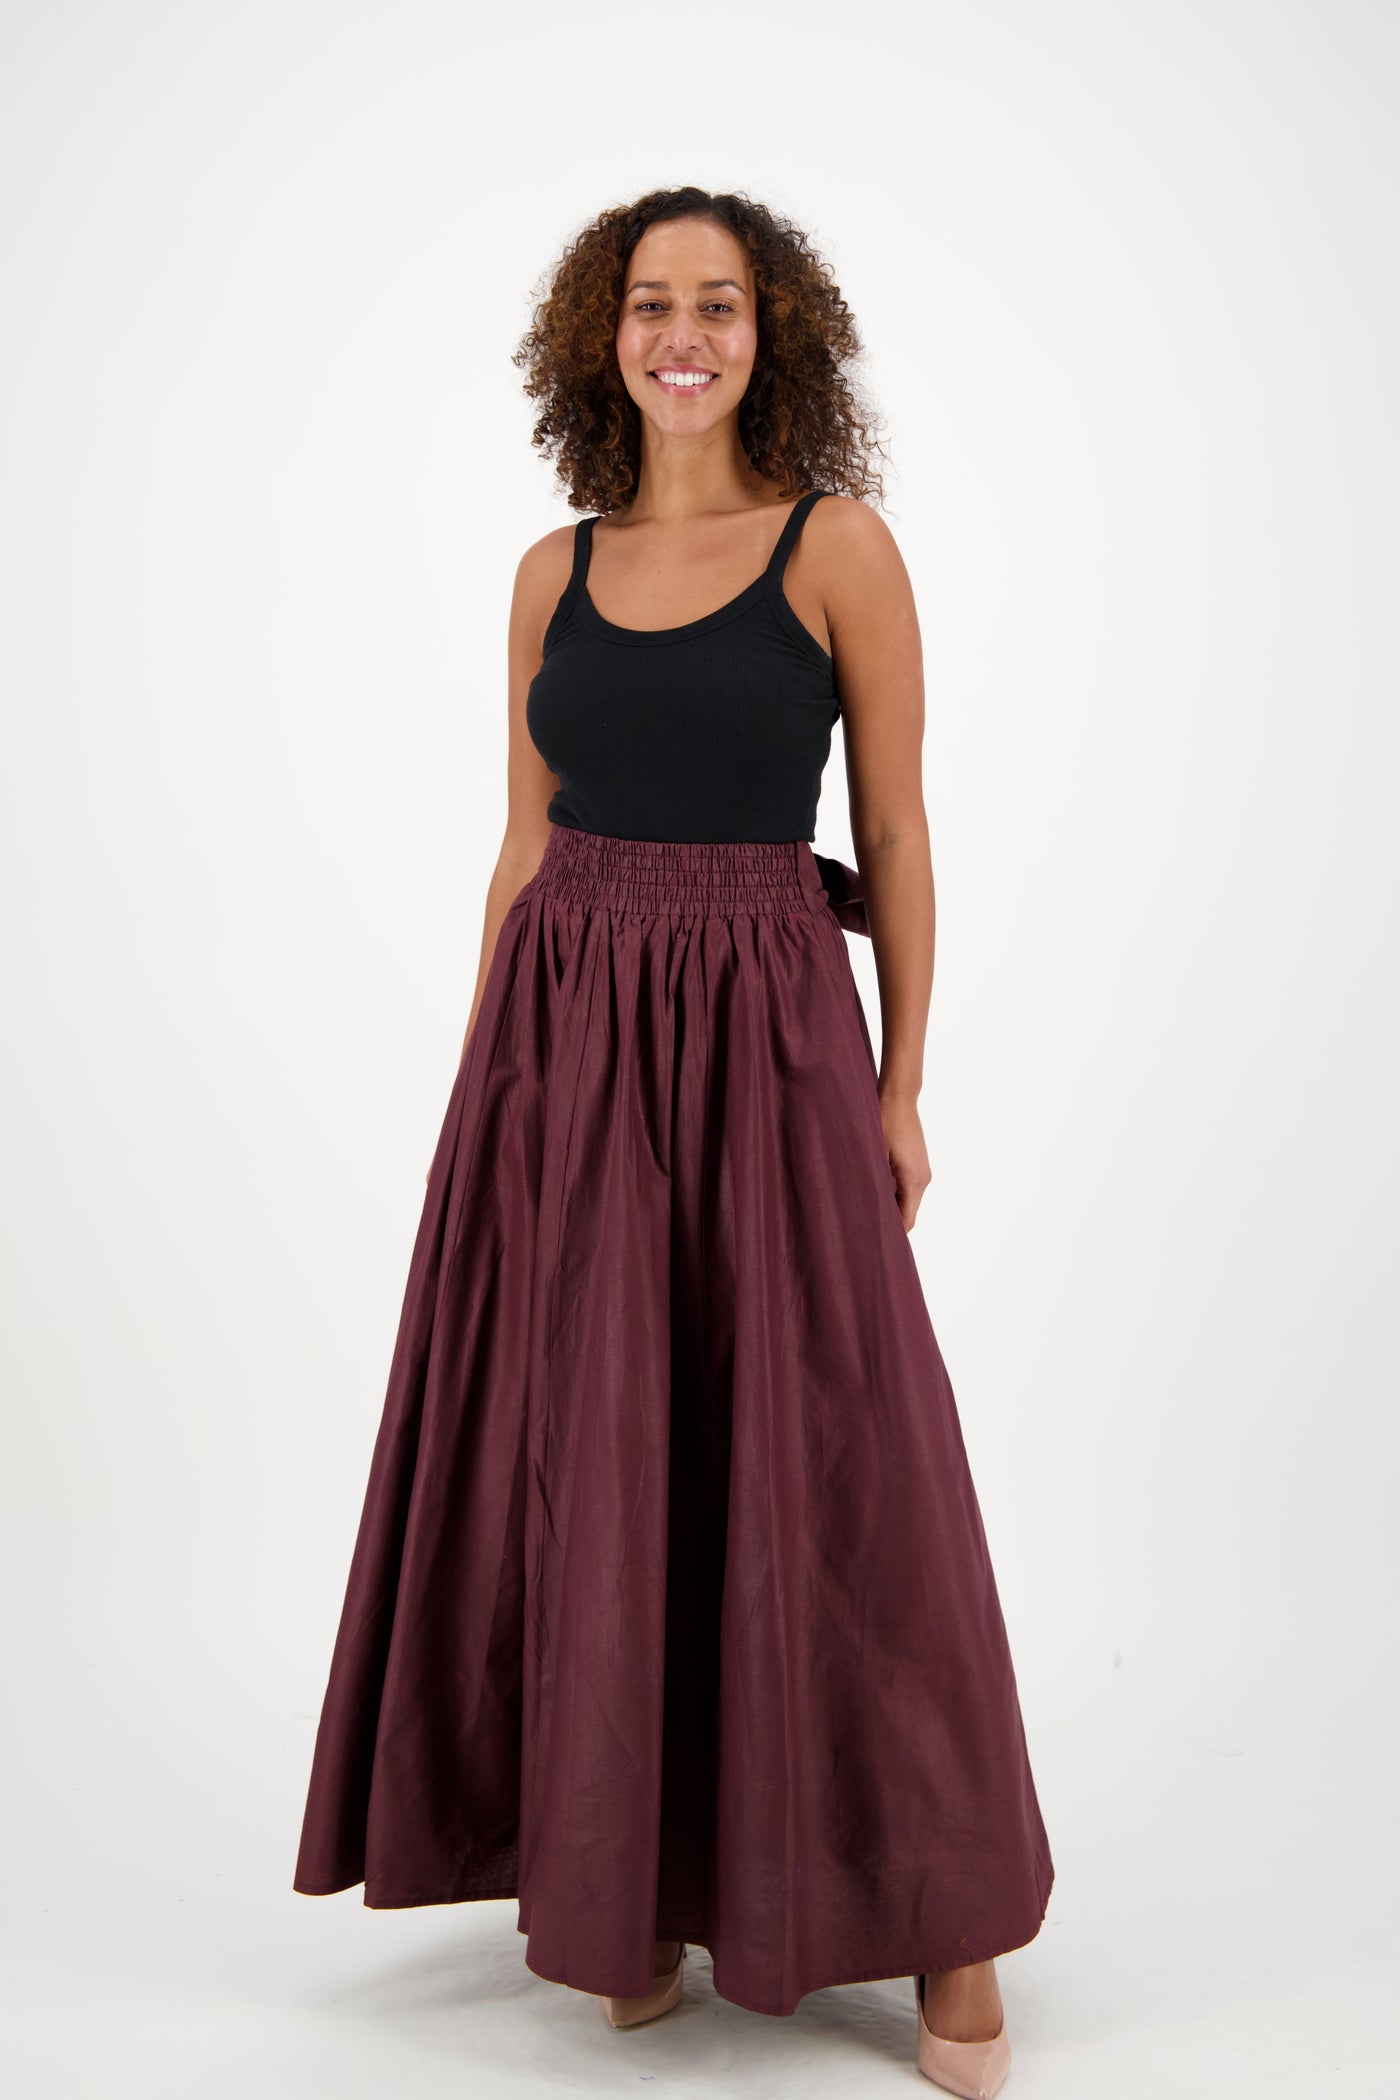 Solid Color Long Ankara Maxi Skirt 16317-Brown - Advance Apparels Inc